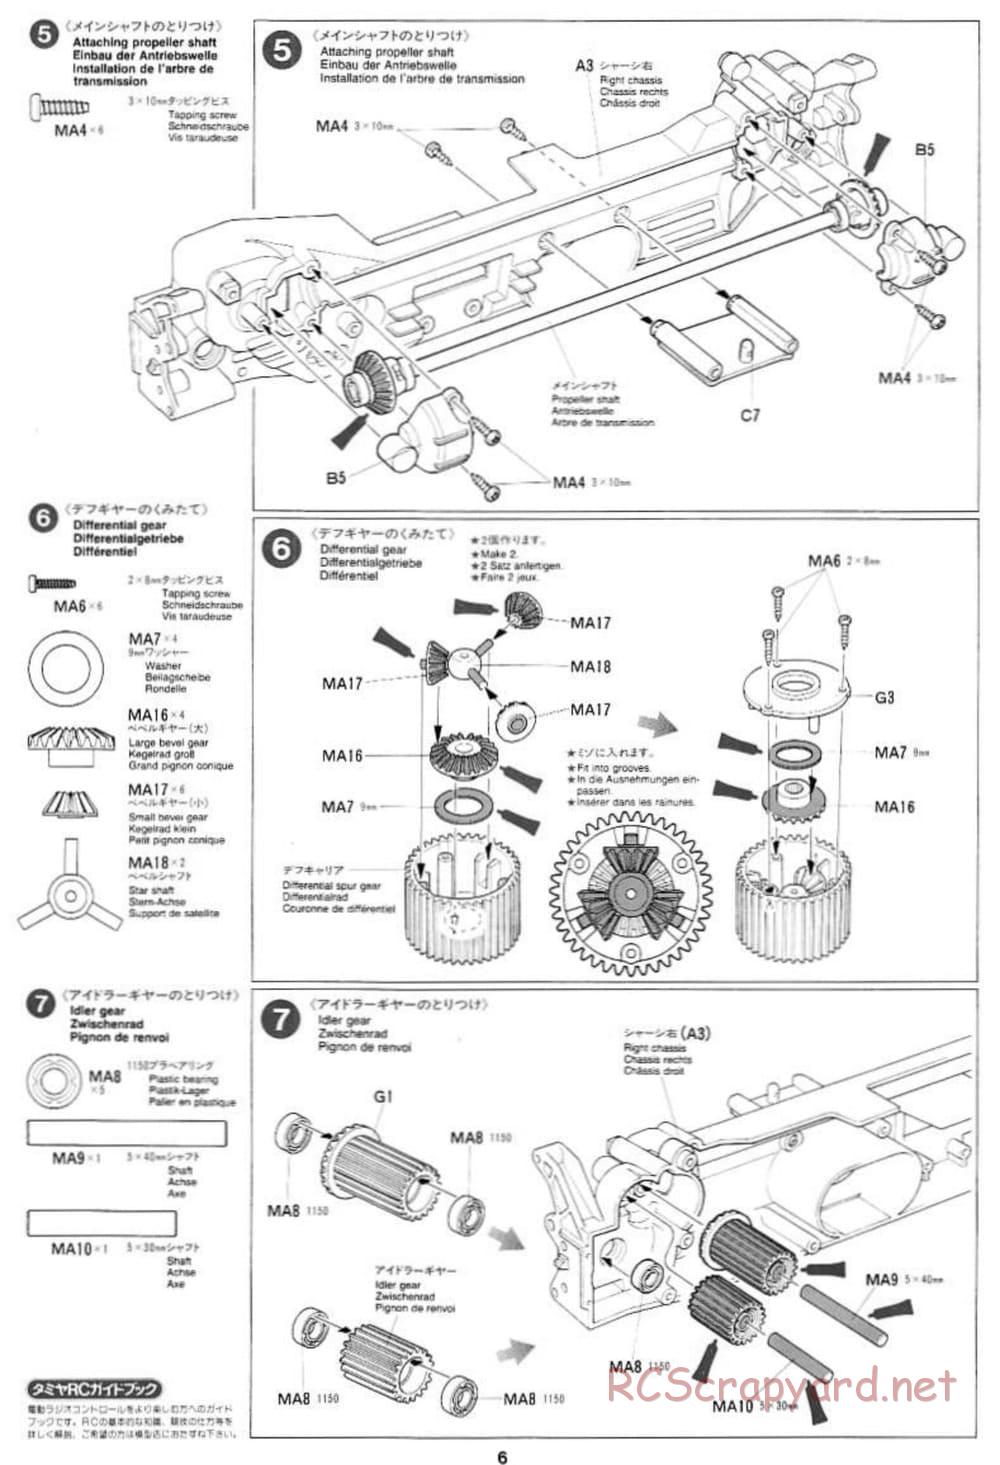 Tamiya - Subaru Impreza WRC - TL-01 Chassis - Manual - Page 6